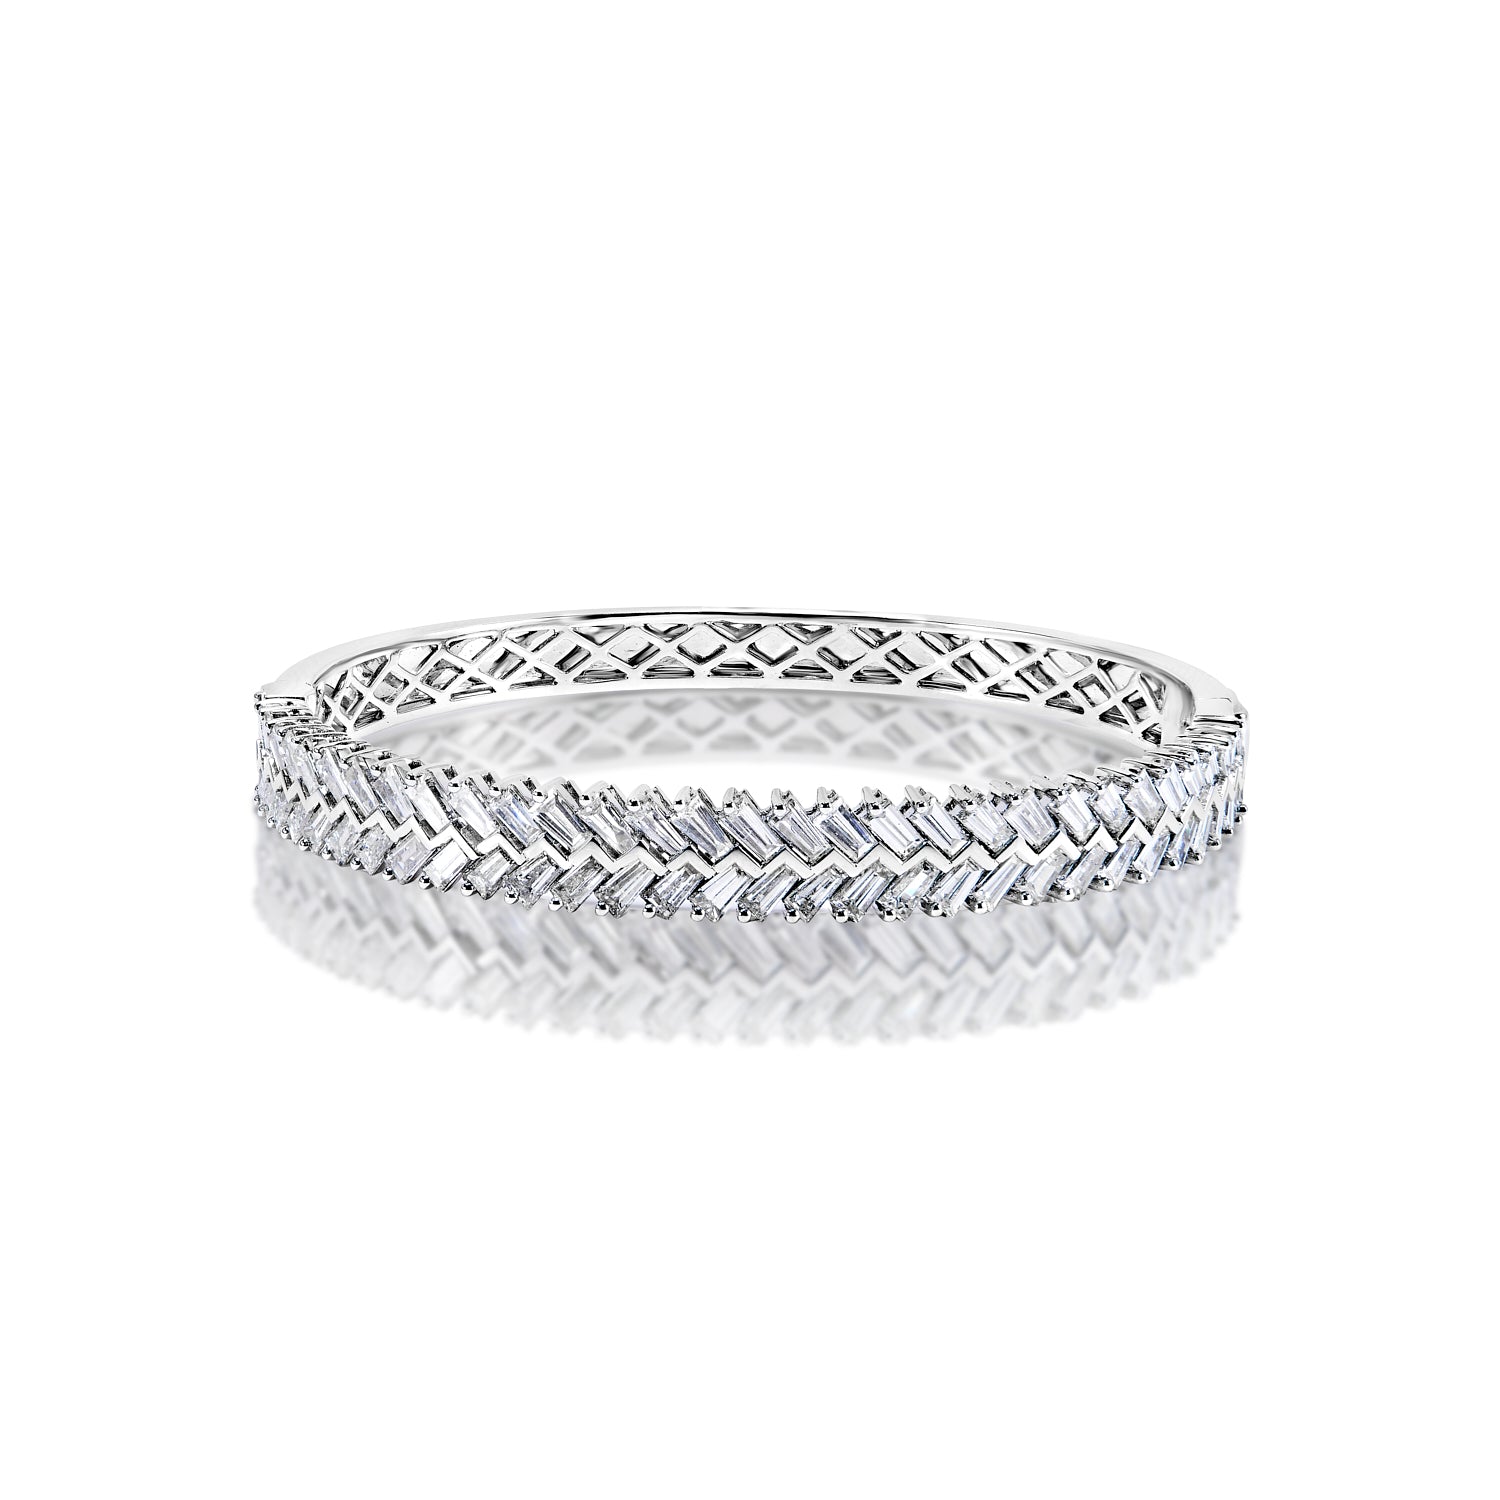  SKYE 6 Carat Emerald Cut Diamond Bangle Bracelet in 14k White Gold Full View